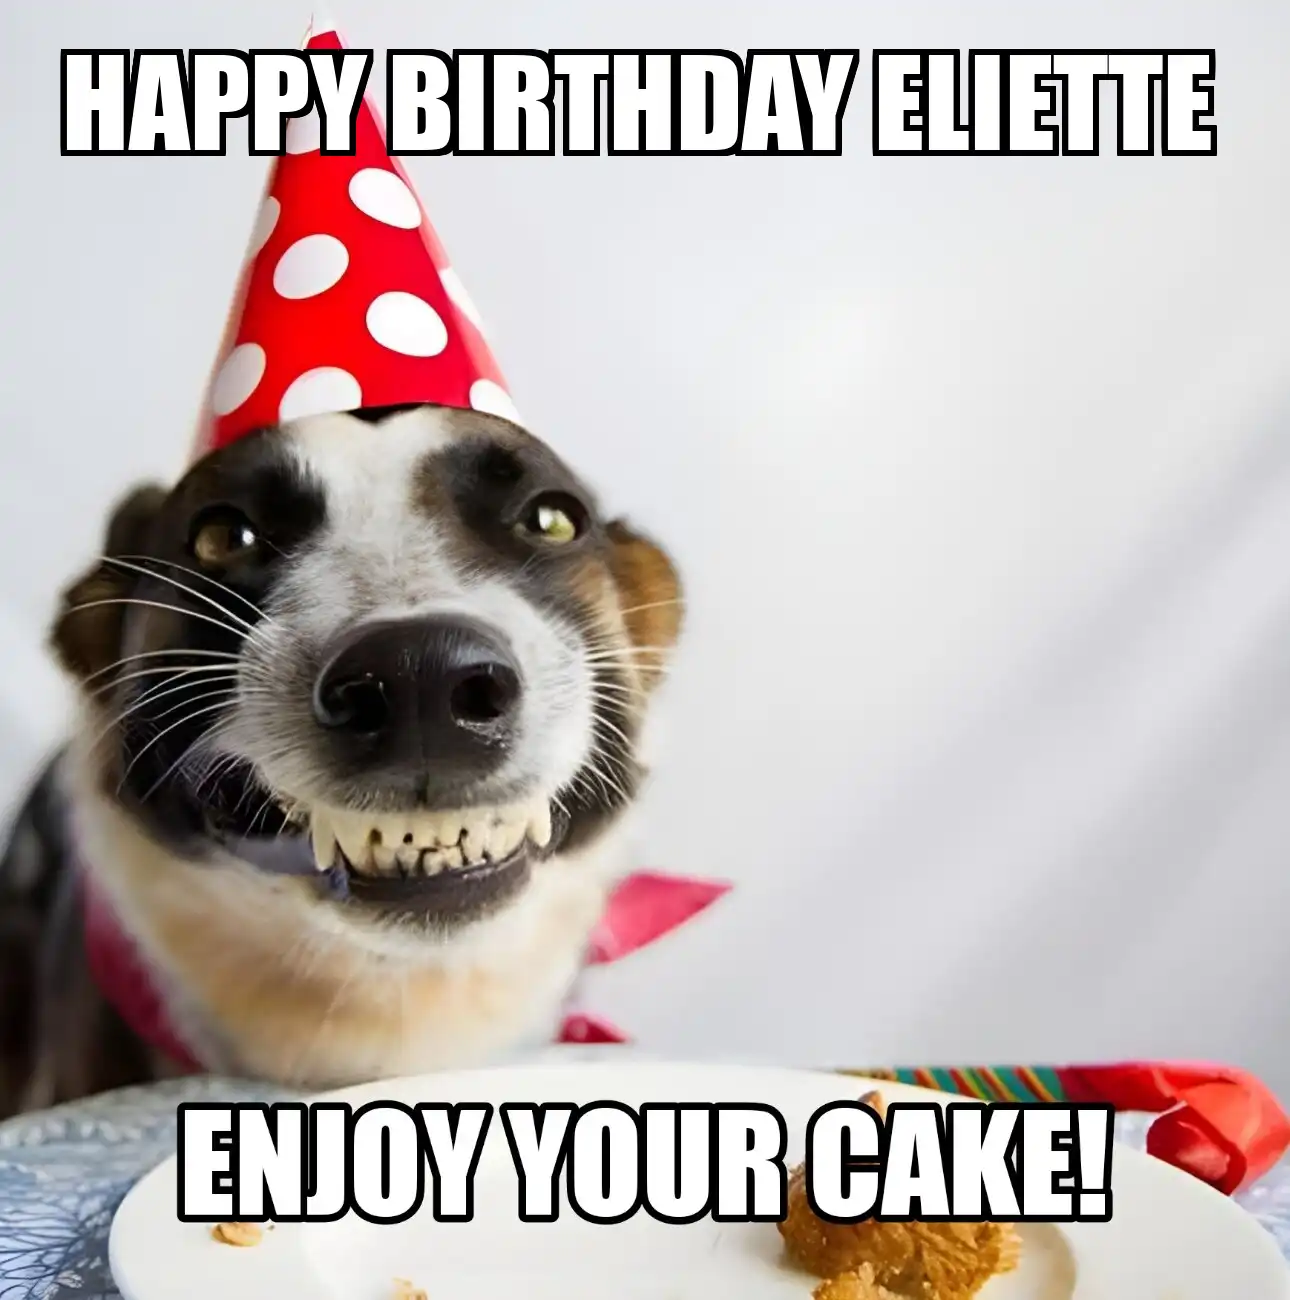 Happy Birthday Eliette Enjoy Your Cake Dog Meme